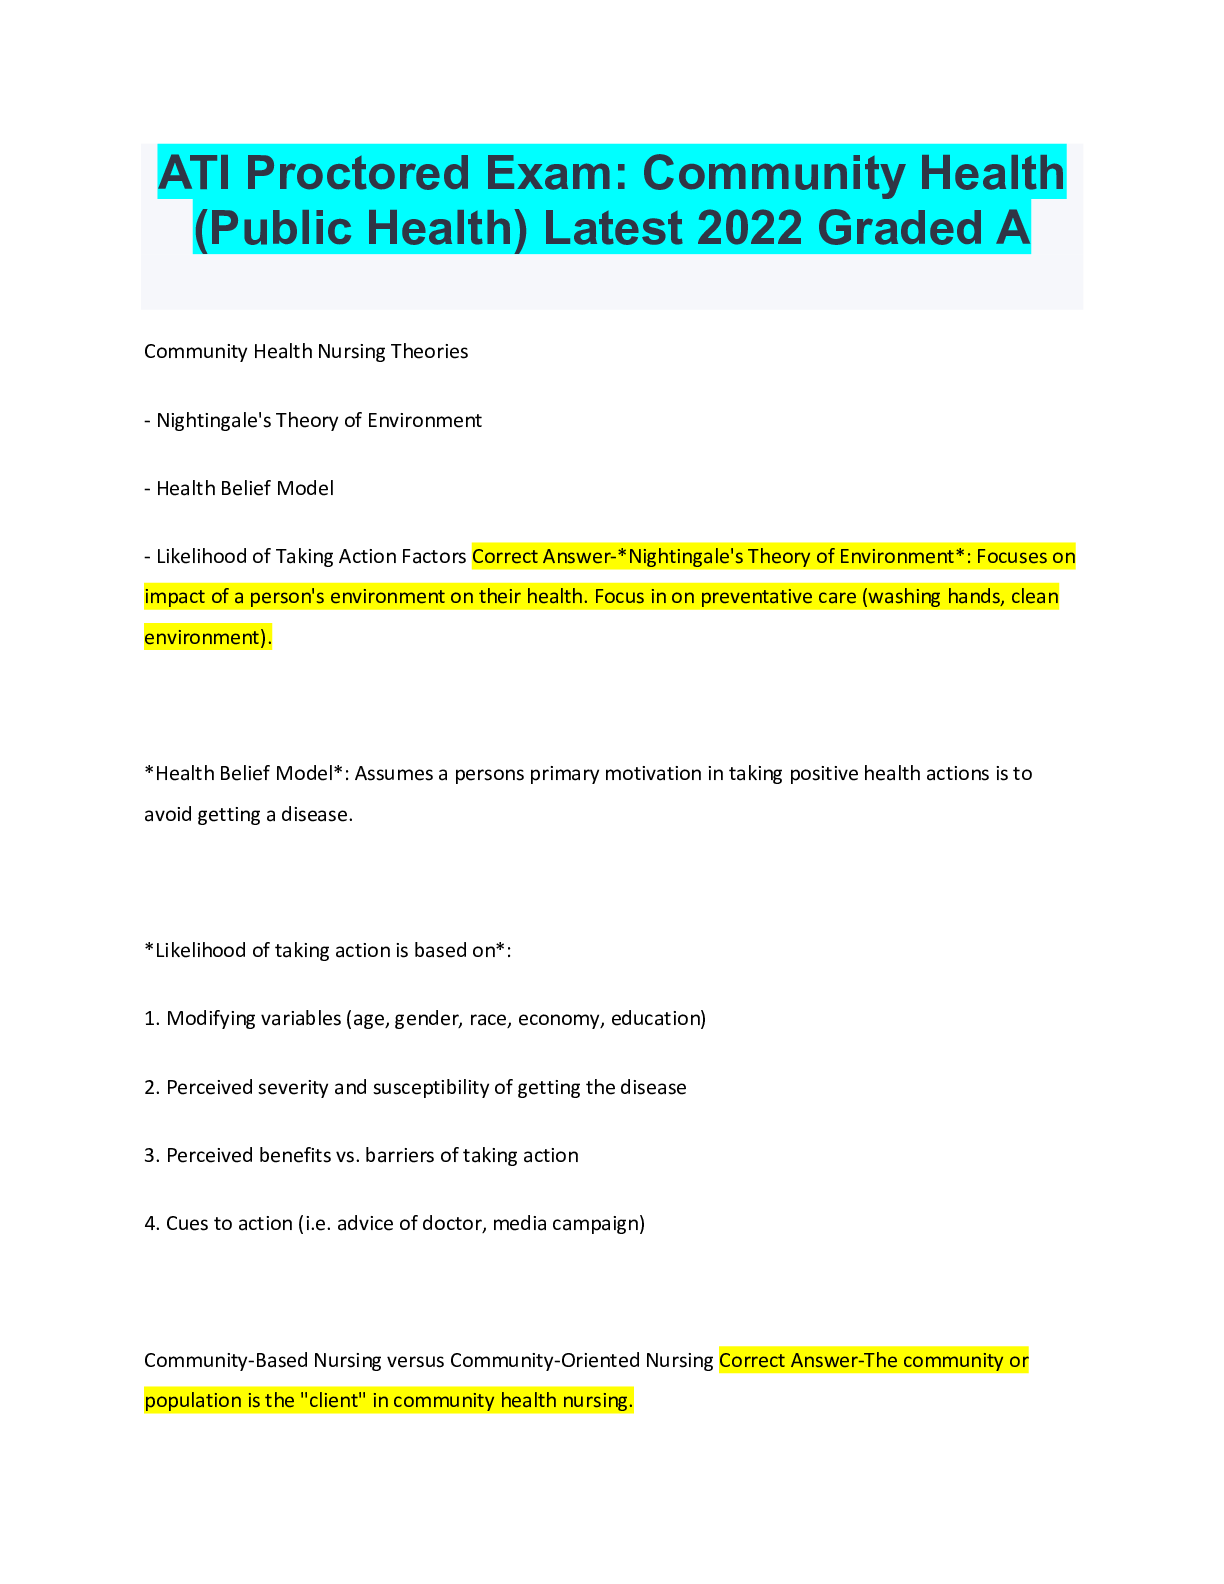 ATI Proctored Exam Community Health (Public Health) Latest 2022 Graded